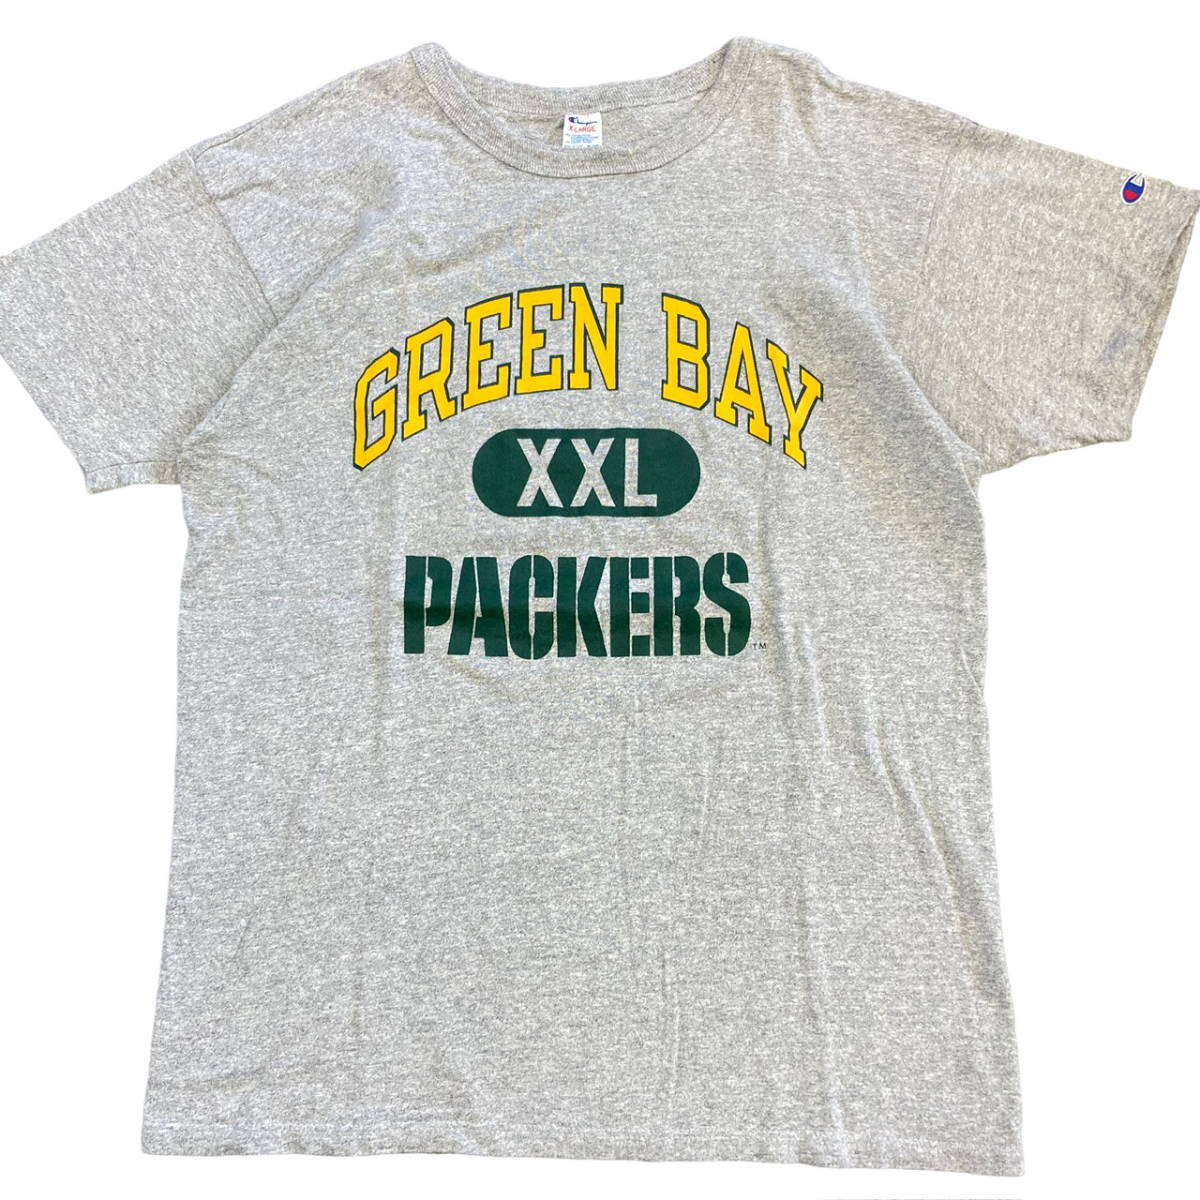 80s USA製 Champion GREEN BAY PACKERS Tシャツ XL 霜降りグレー チャンピオン グリーンベイ パッカーズ NFL ３段ロゴ ヴィンテージ